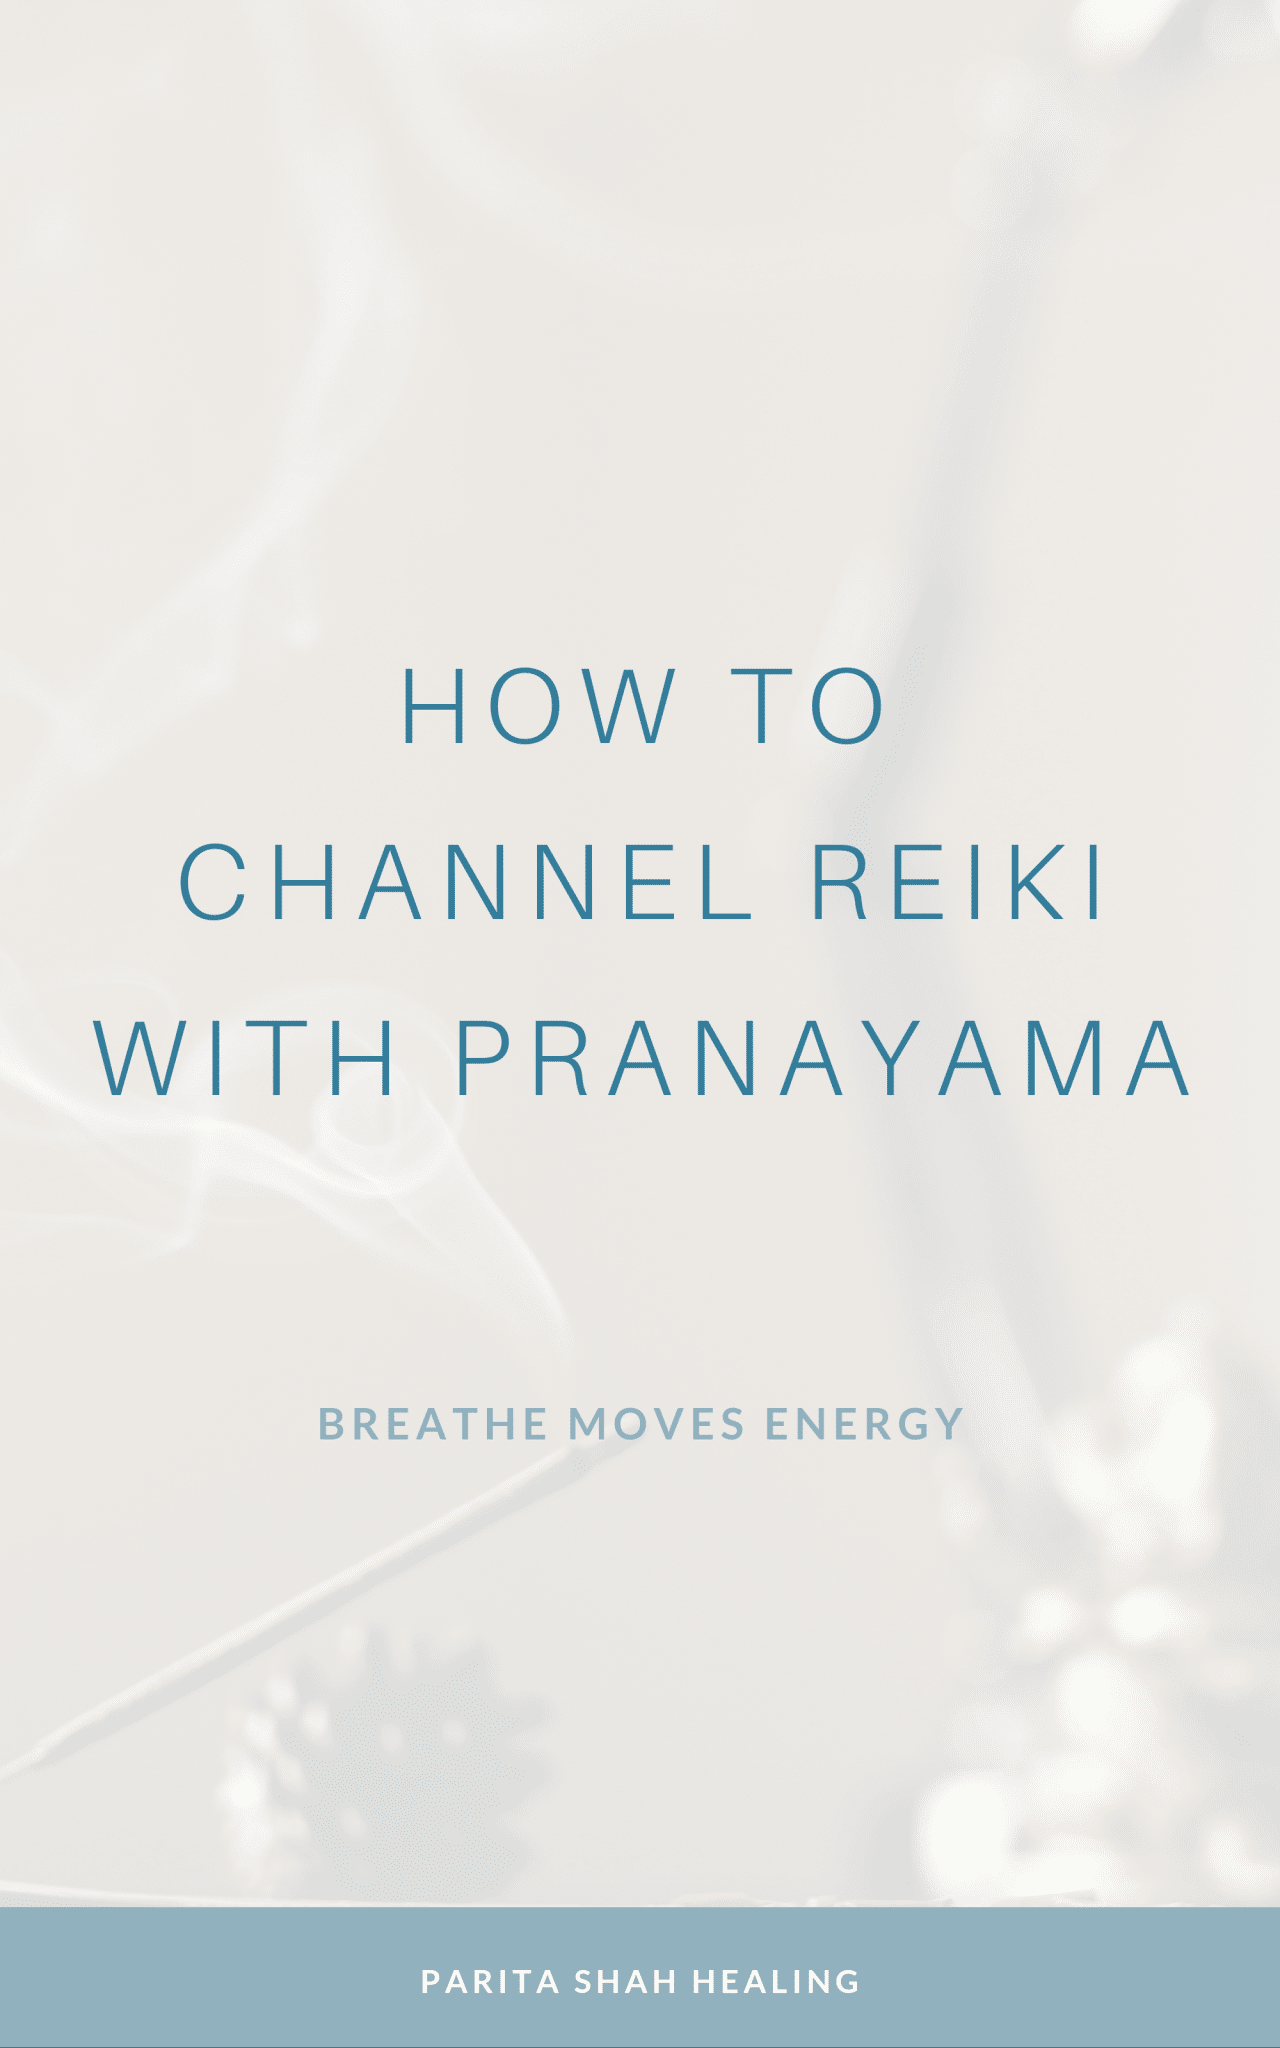 Pranayama - Reiki - Breathe - Lifeforce - Prana